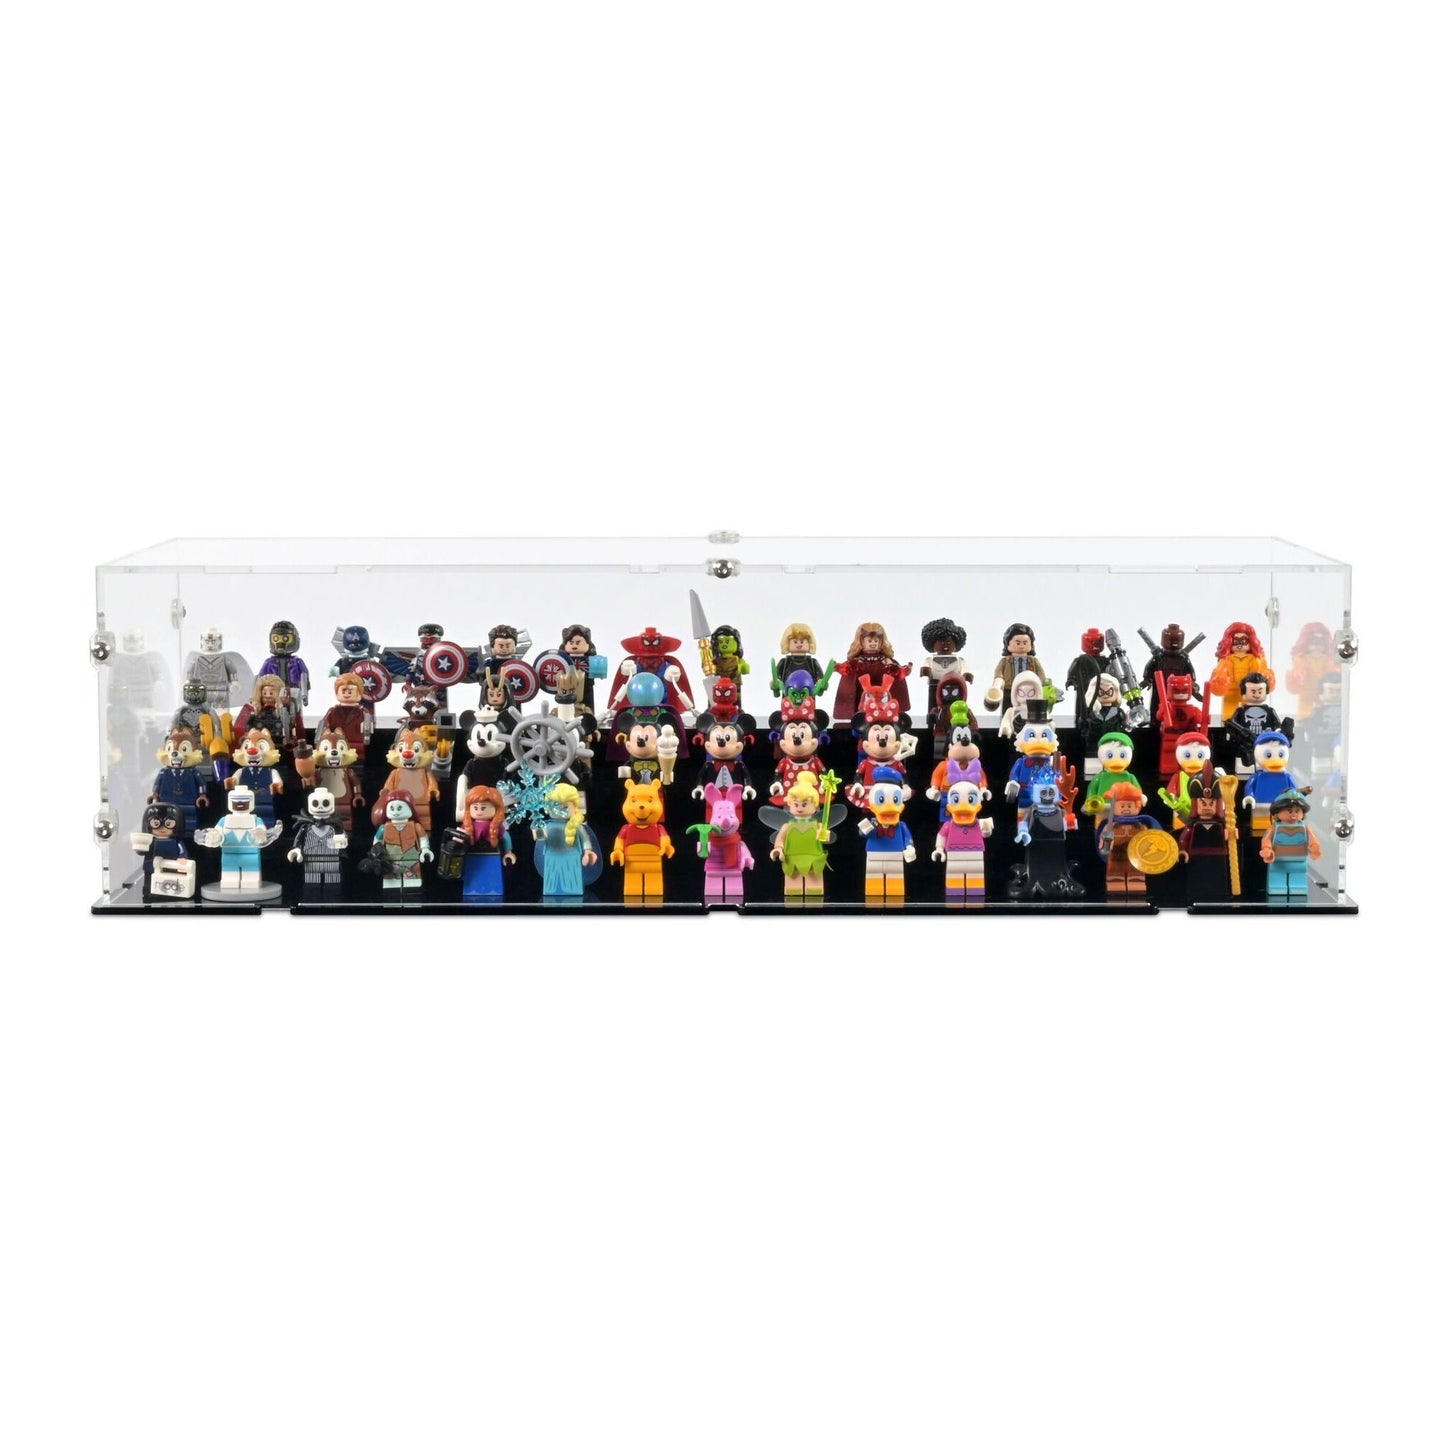 60 LEGO® Minifigures Display Case